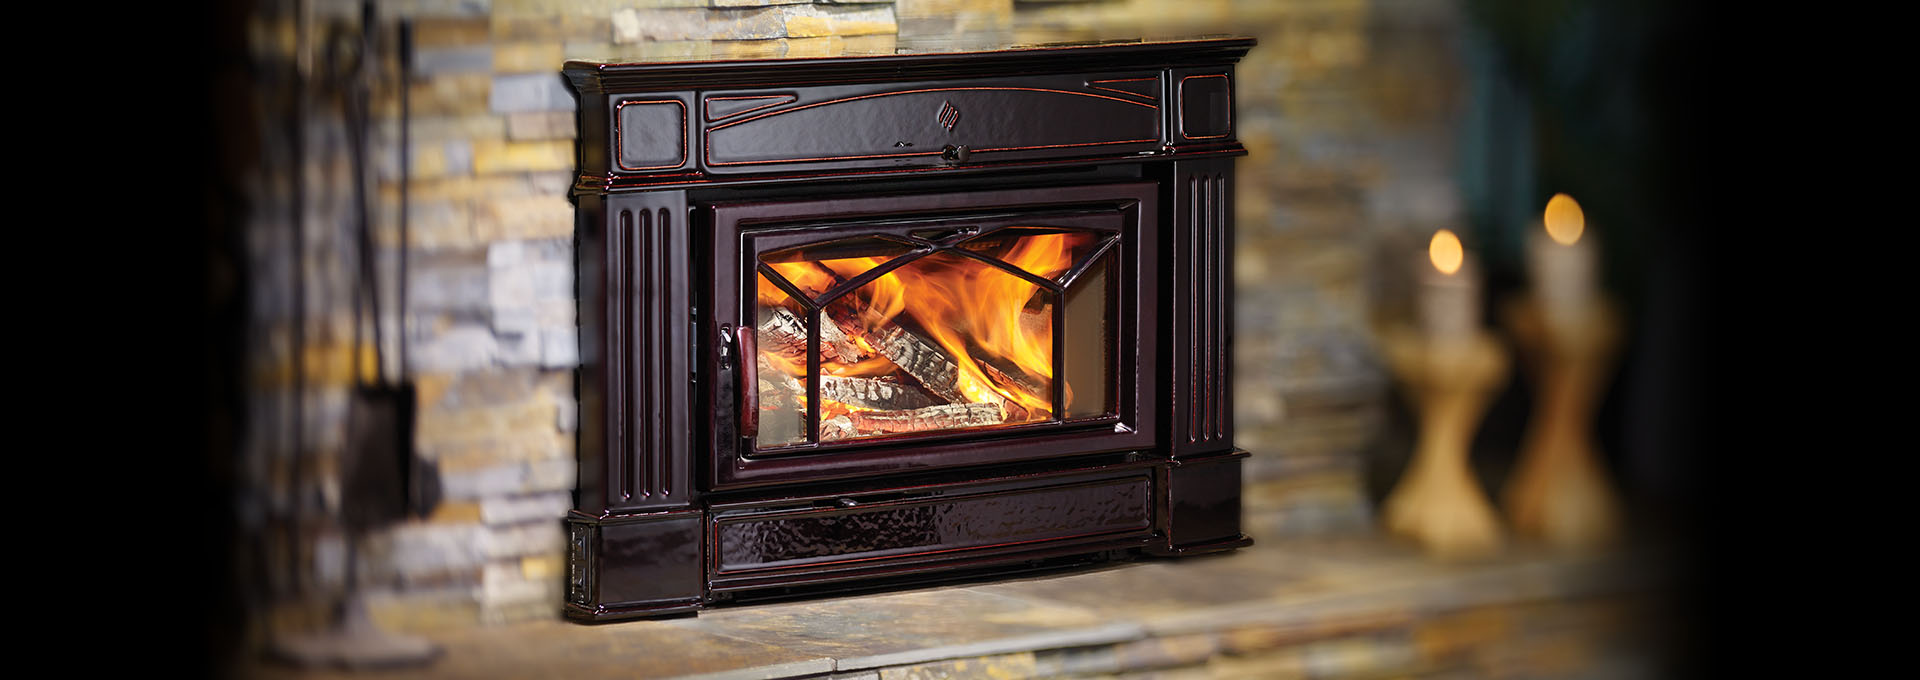 Free Standing Gas Log Fireplace Luxury Wood Inserts Epa Certified